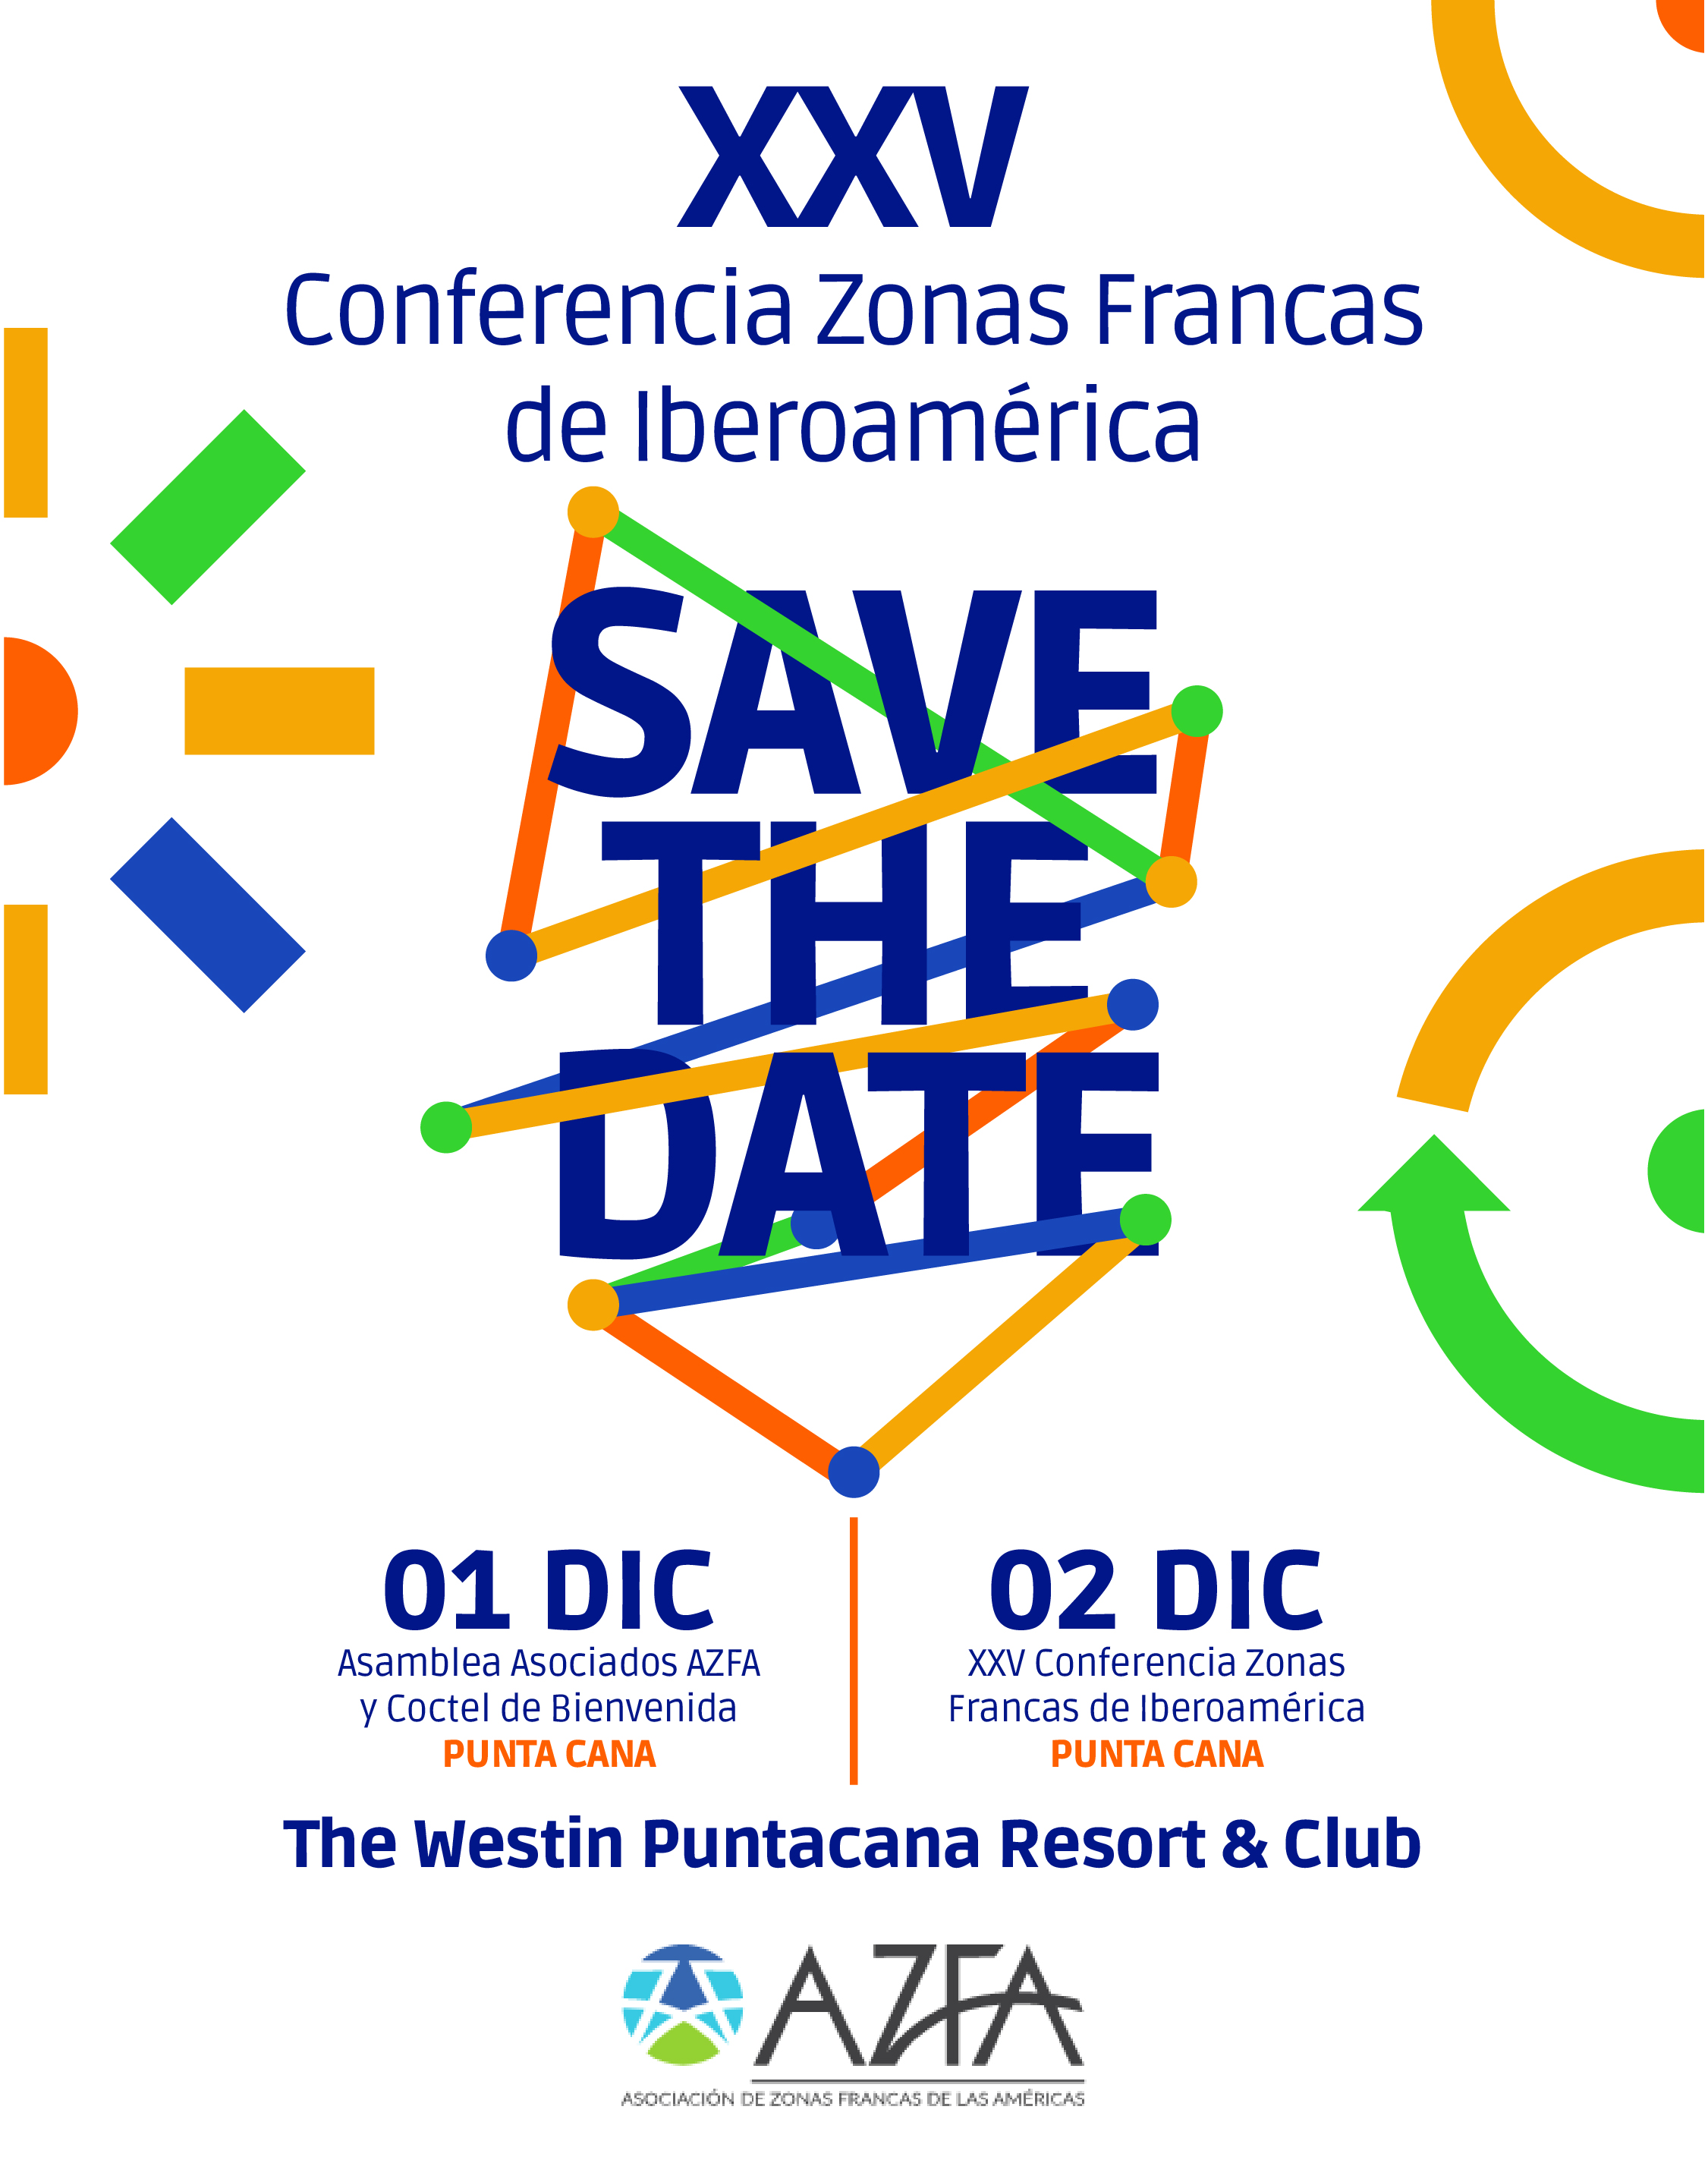 XXV Conferencia de Zonas Francas de Iberoamérica